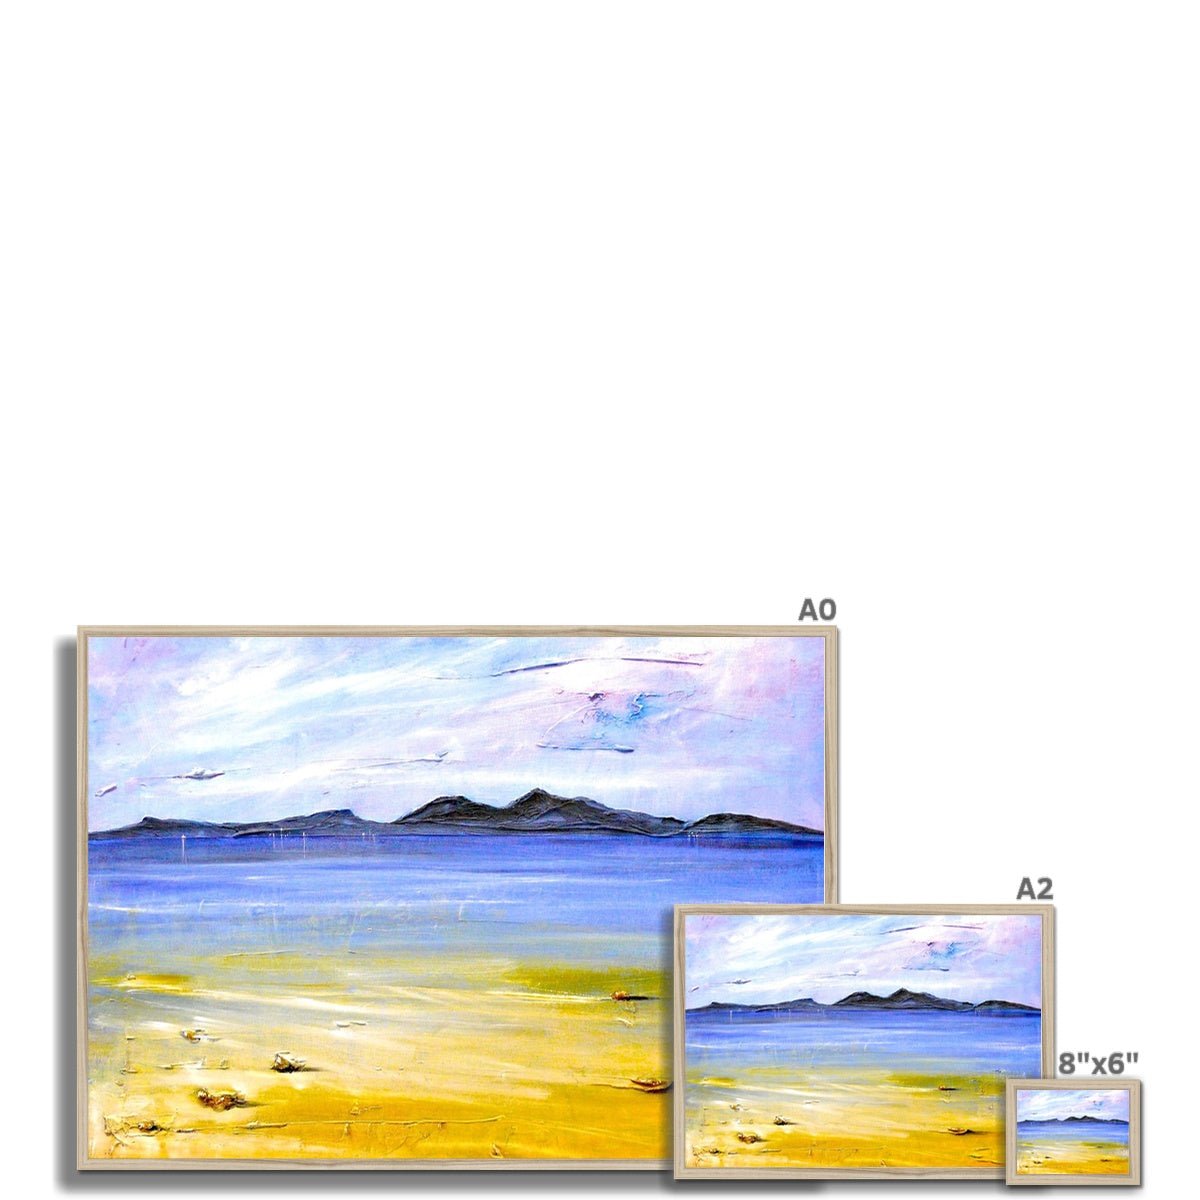 Camusdarach Beach Arisaig Painting | Framed Prints From Scotland-Framed Prints-Scottish Highlands & Lowlands Art Gallery-Paintings, Prints, Homeware, Art Gifts From Scotland By Scottish Artist Kevin Hunter